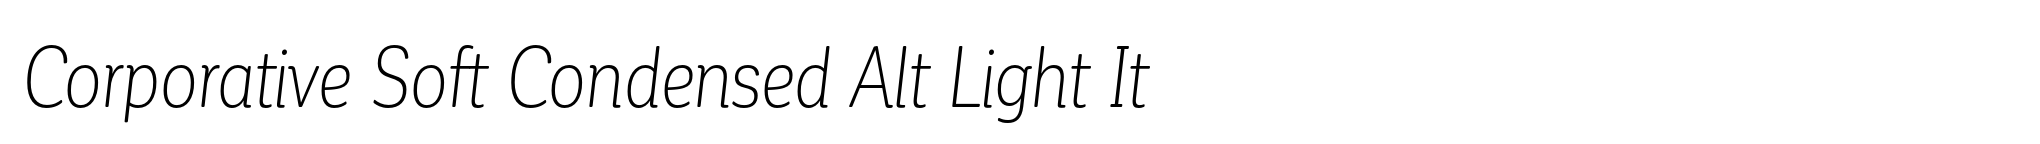 Corporative Soft Condensed Alt Light It image